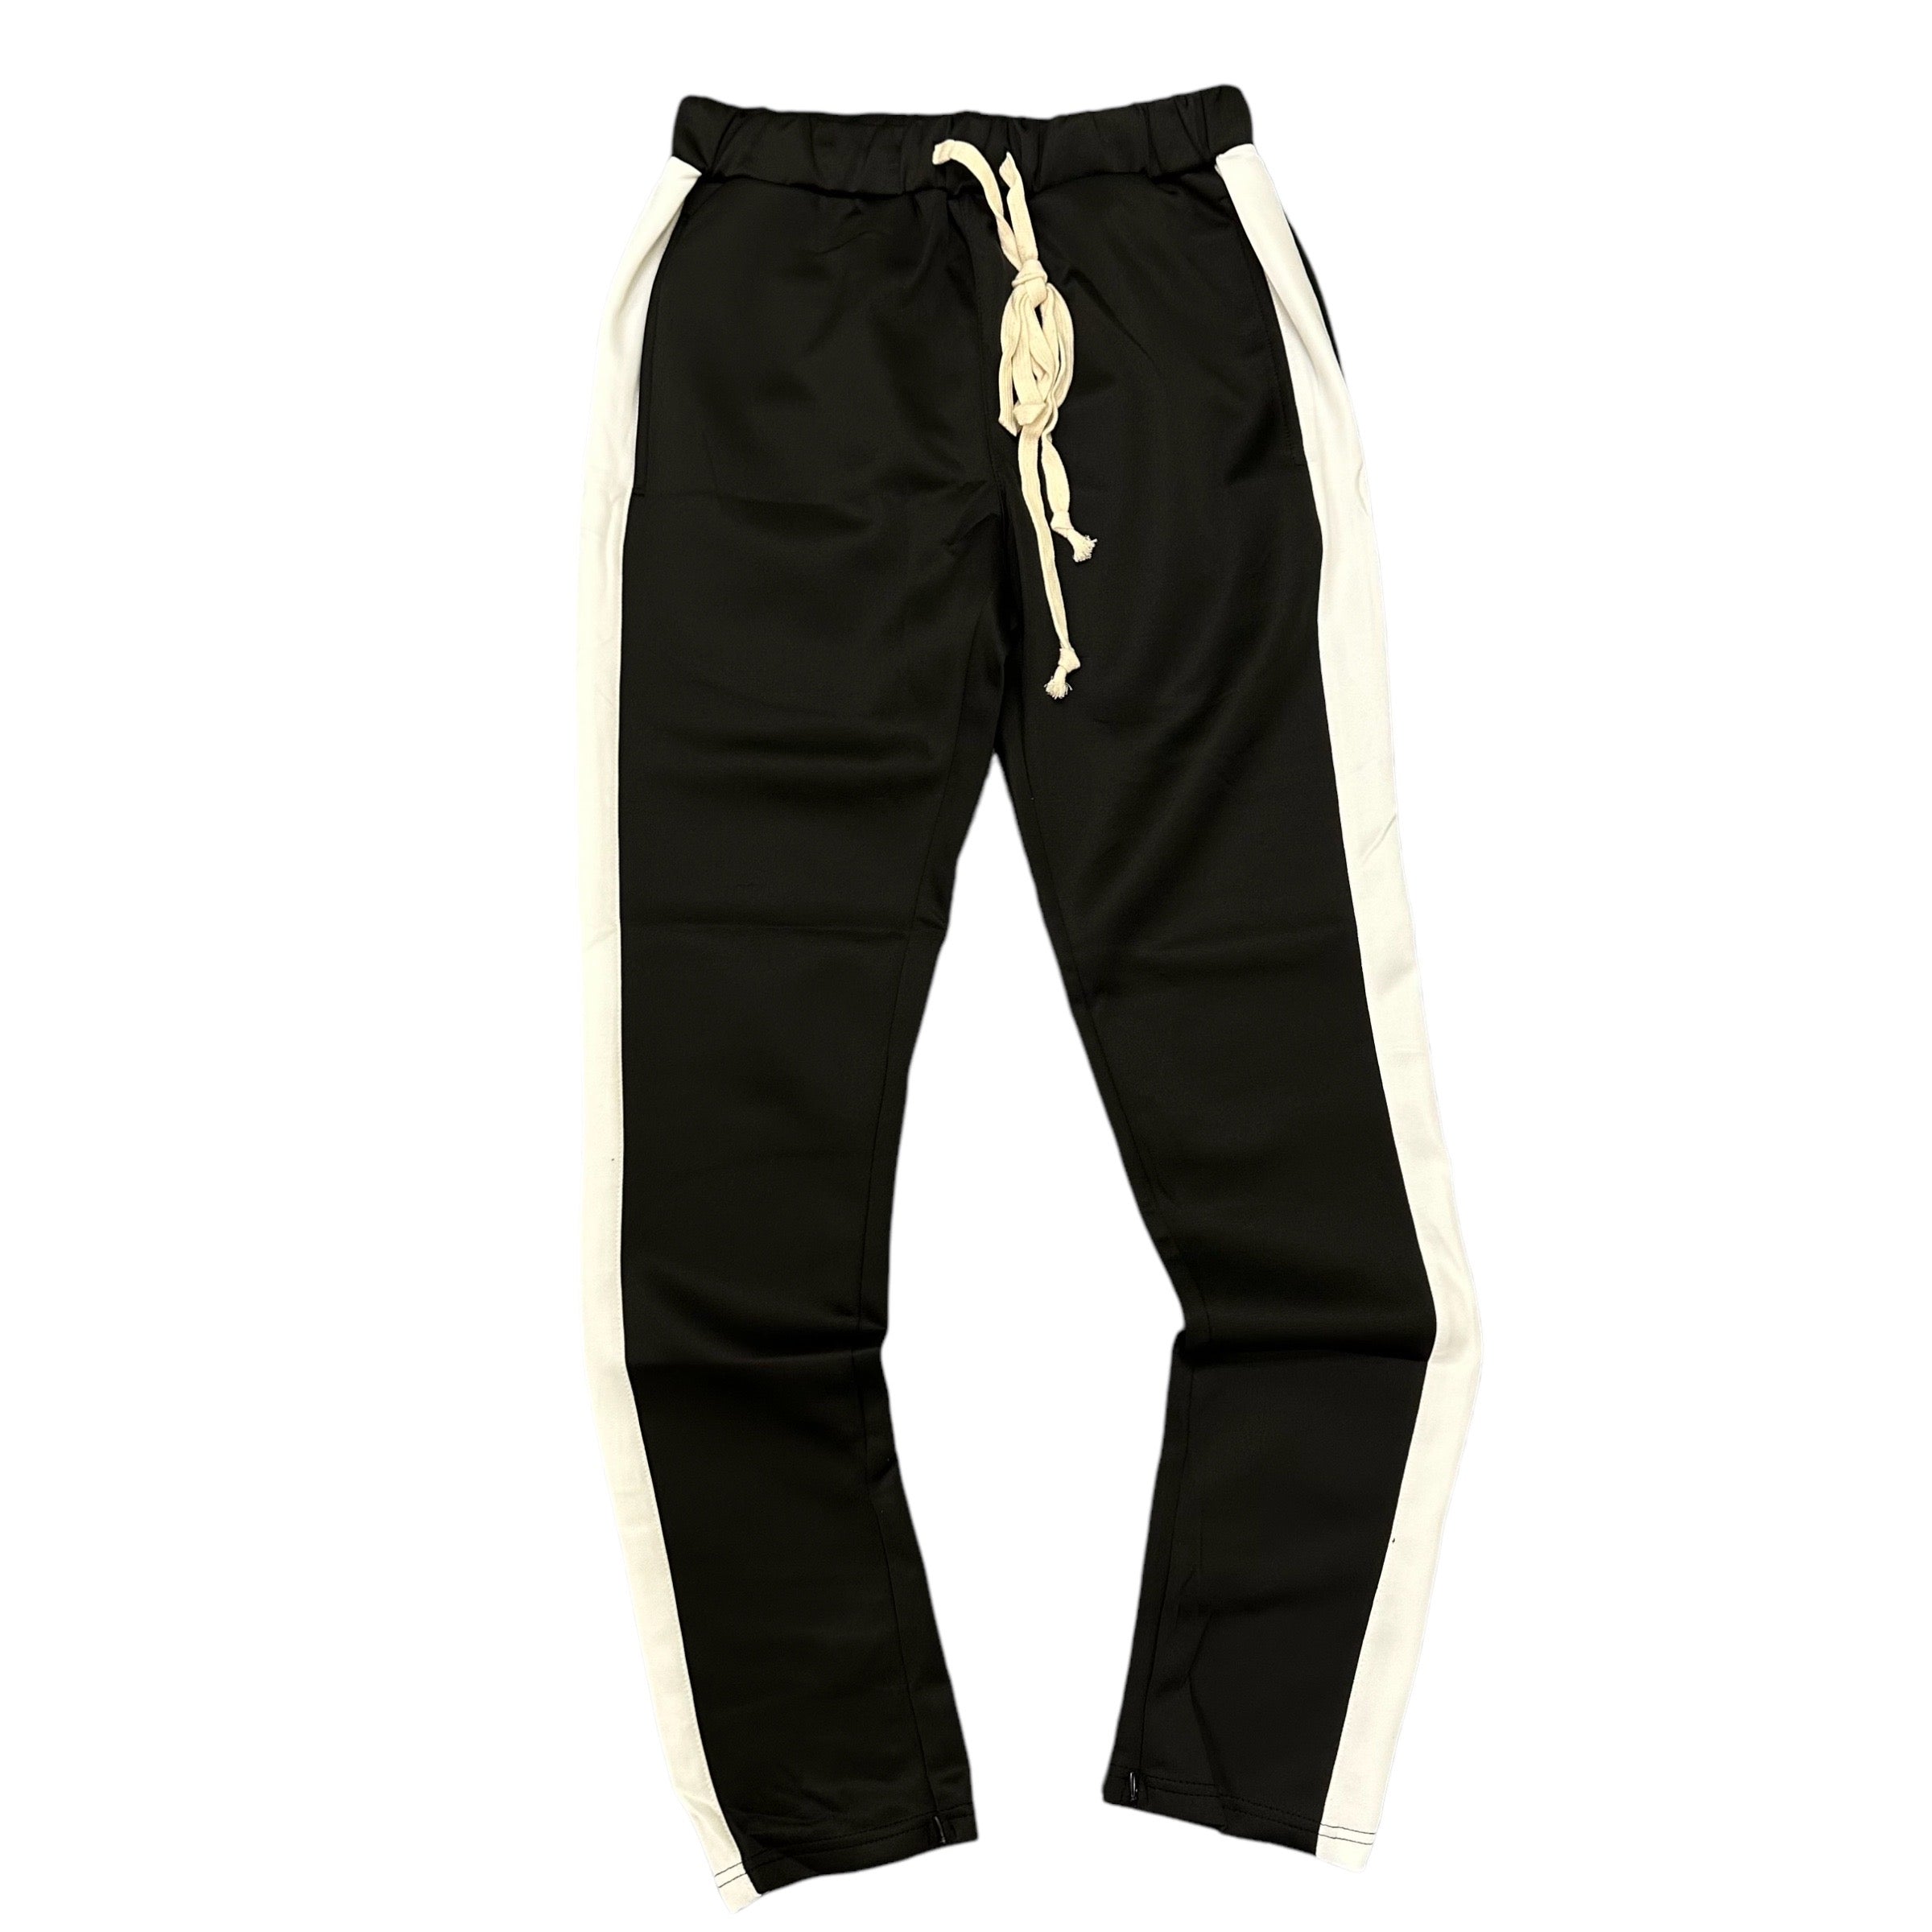 Ckel Slim Track Pants Black White 119